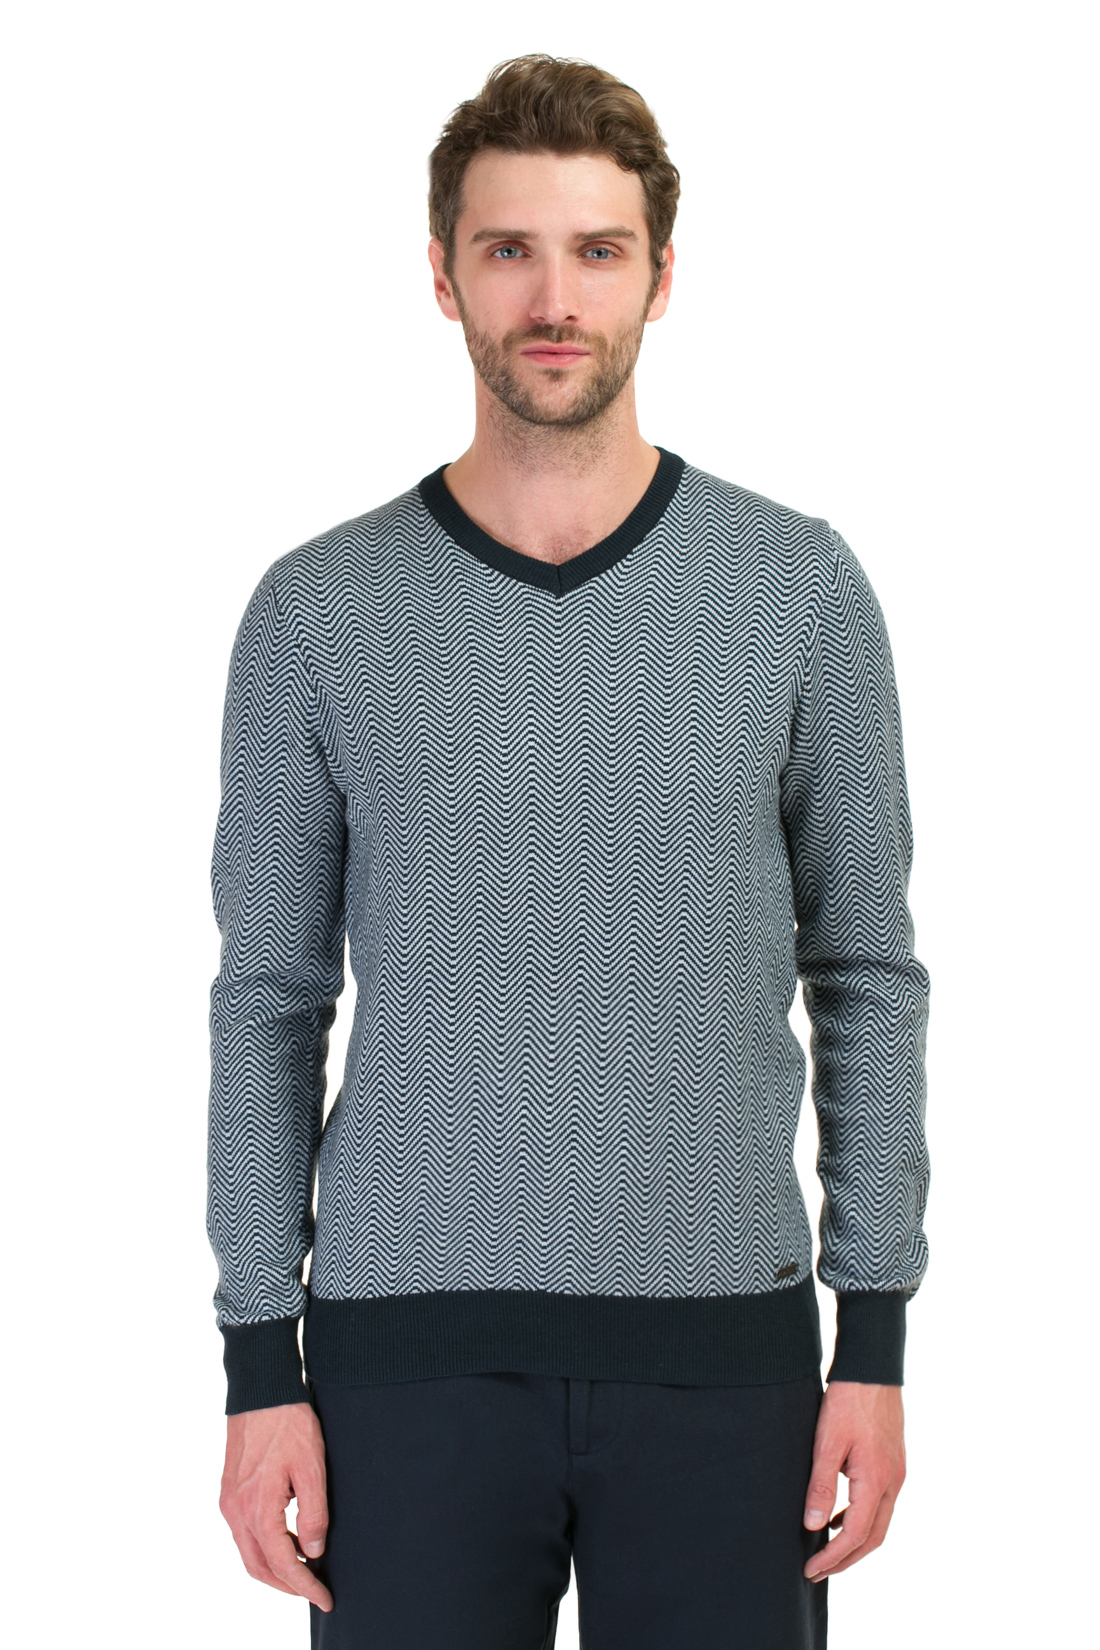 Пуловер с твидовым узором (арт. baon B637009), размер XXL, цвет синий Пуловер с твидовым узором (арт. baon B637009) - фото 1